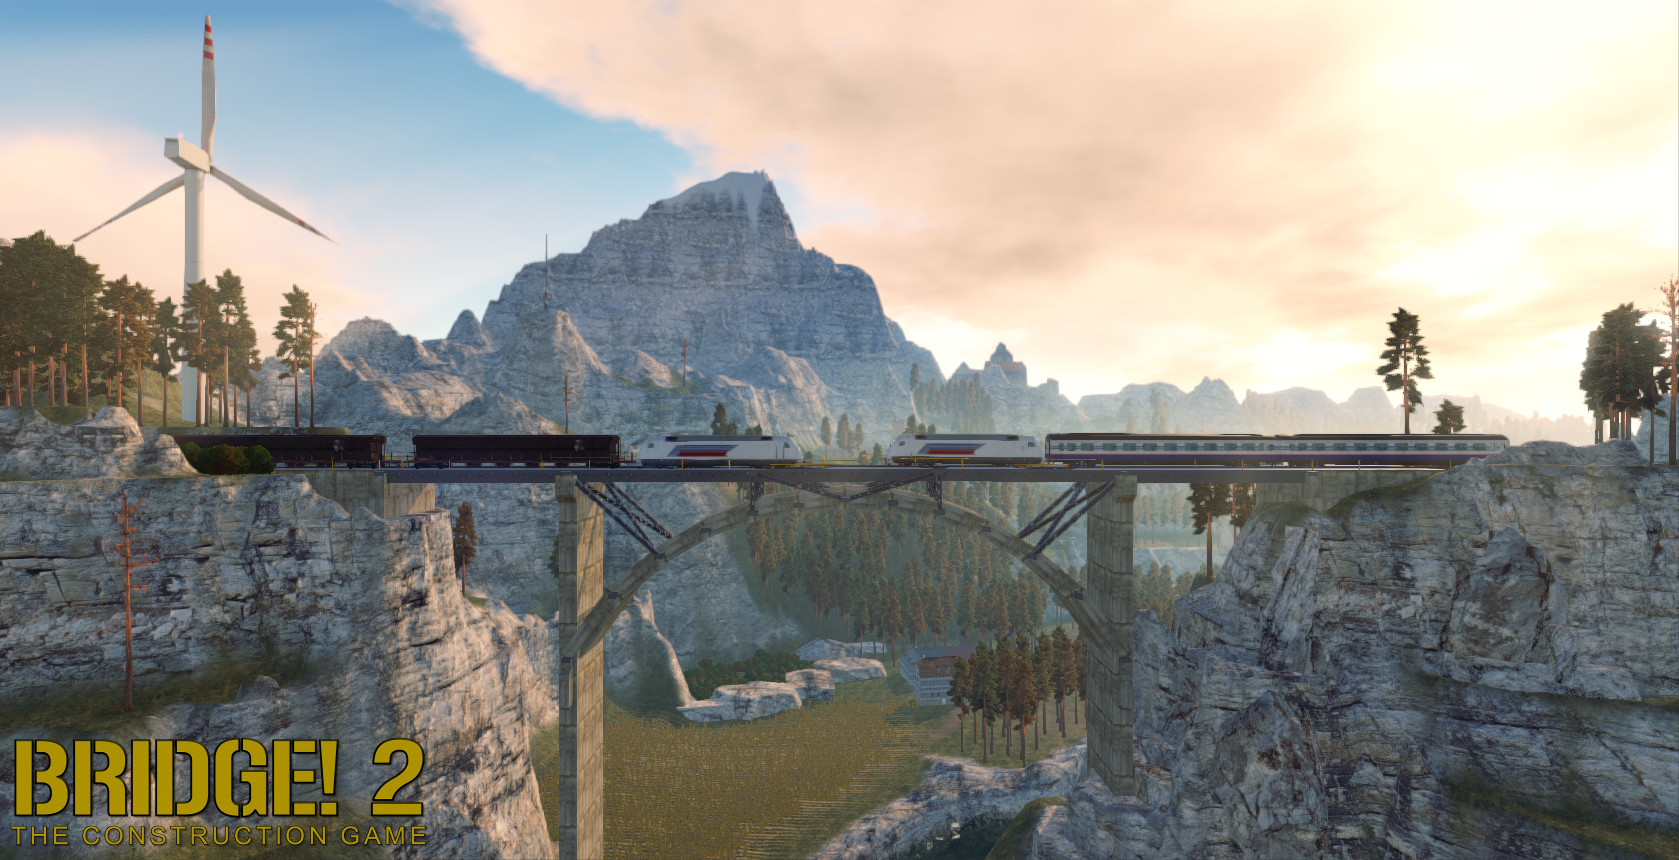 star trek bridge commander maximum warp edition multiplayer